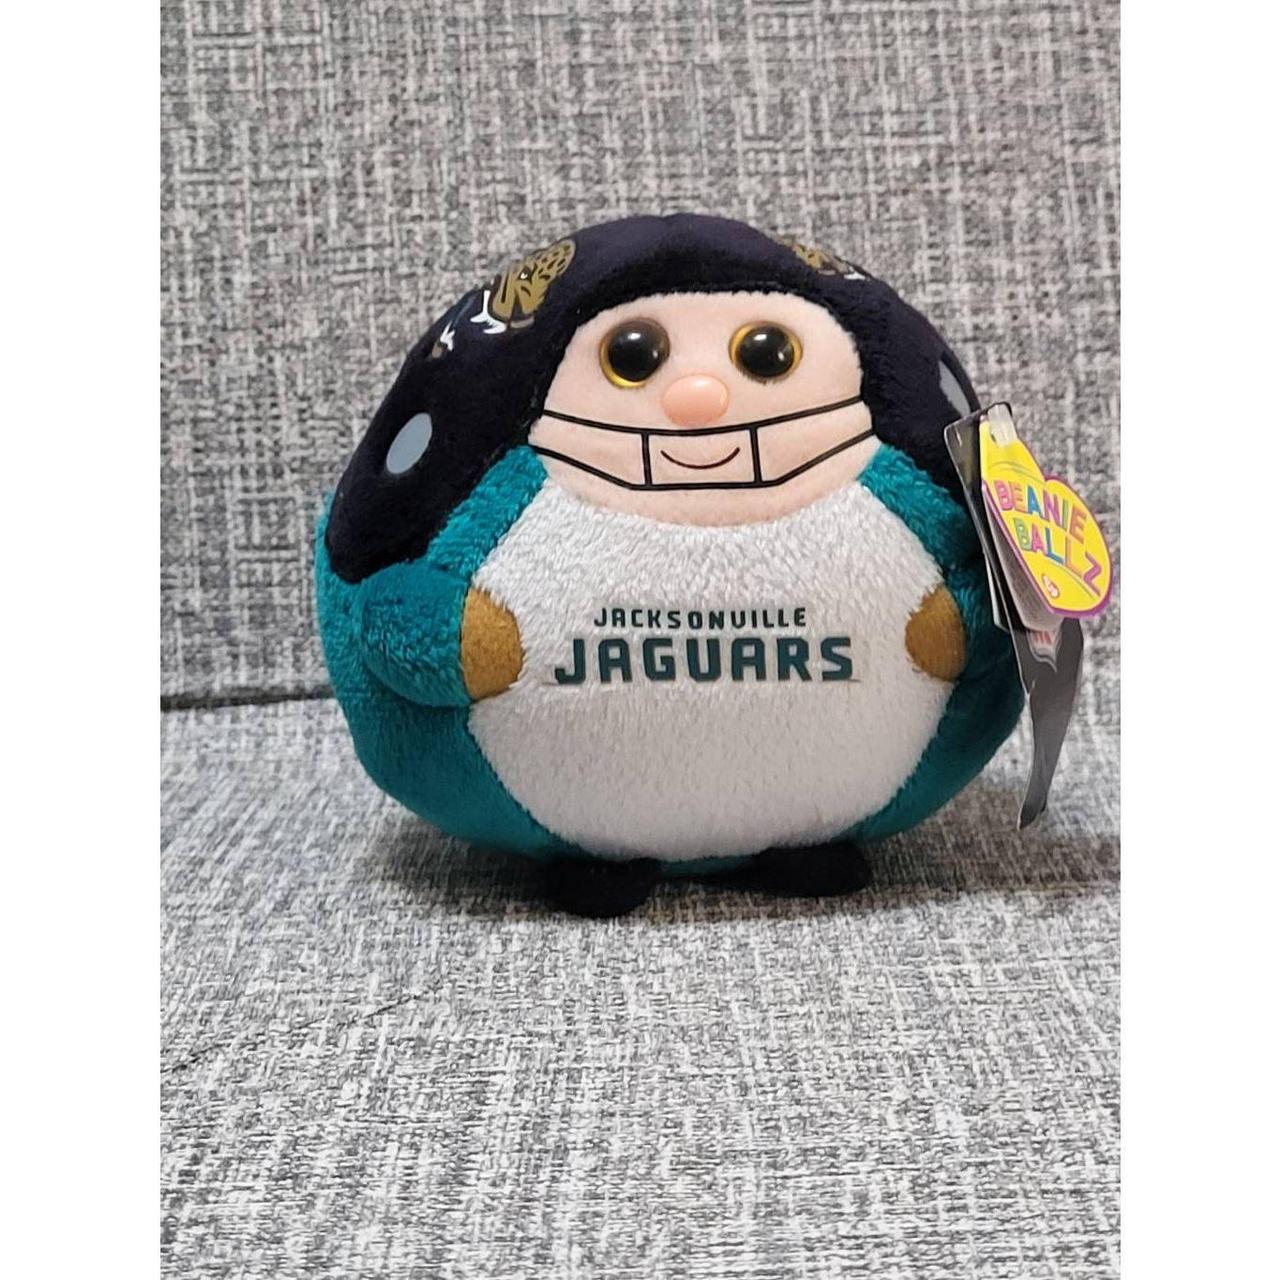 Ty Beanie Ballz Jacksonville Jaguar - NFL Football - Depop